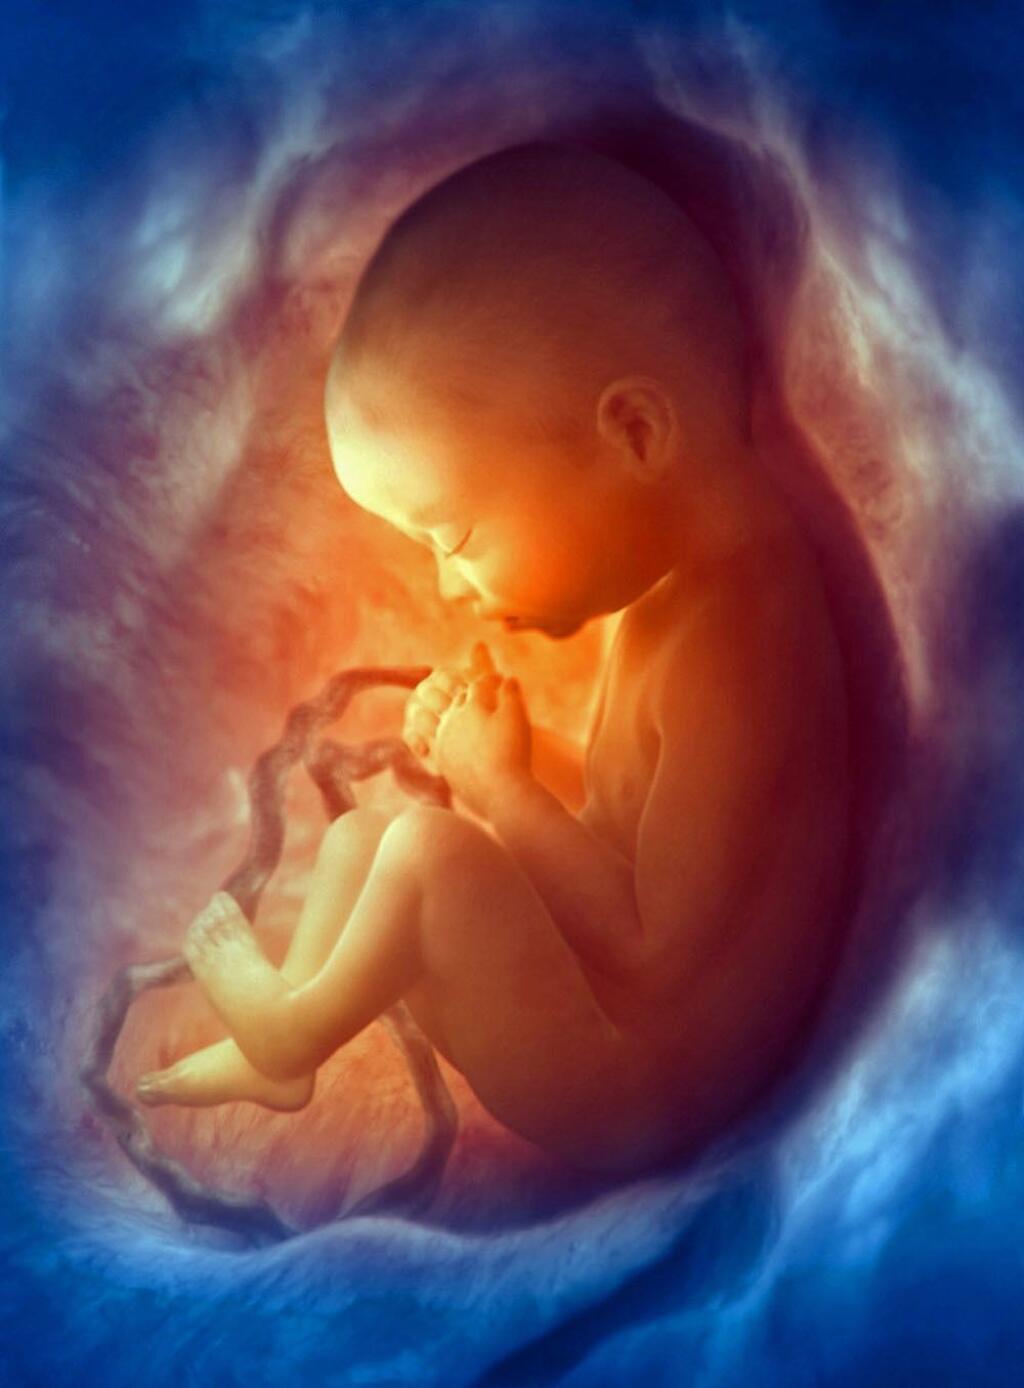 Внутриутробная жизнь ребенка. Утро ребенка. УТ детям. Младенец в утробе.